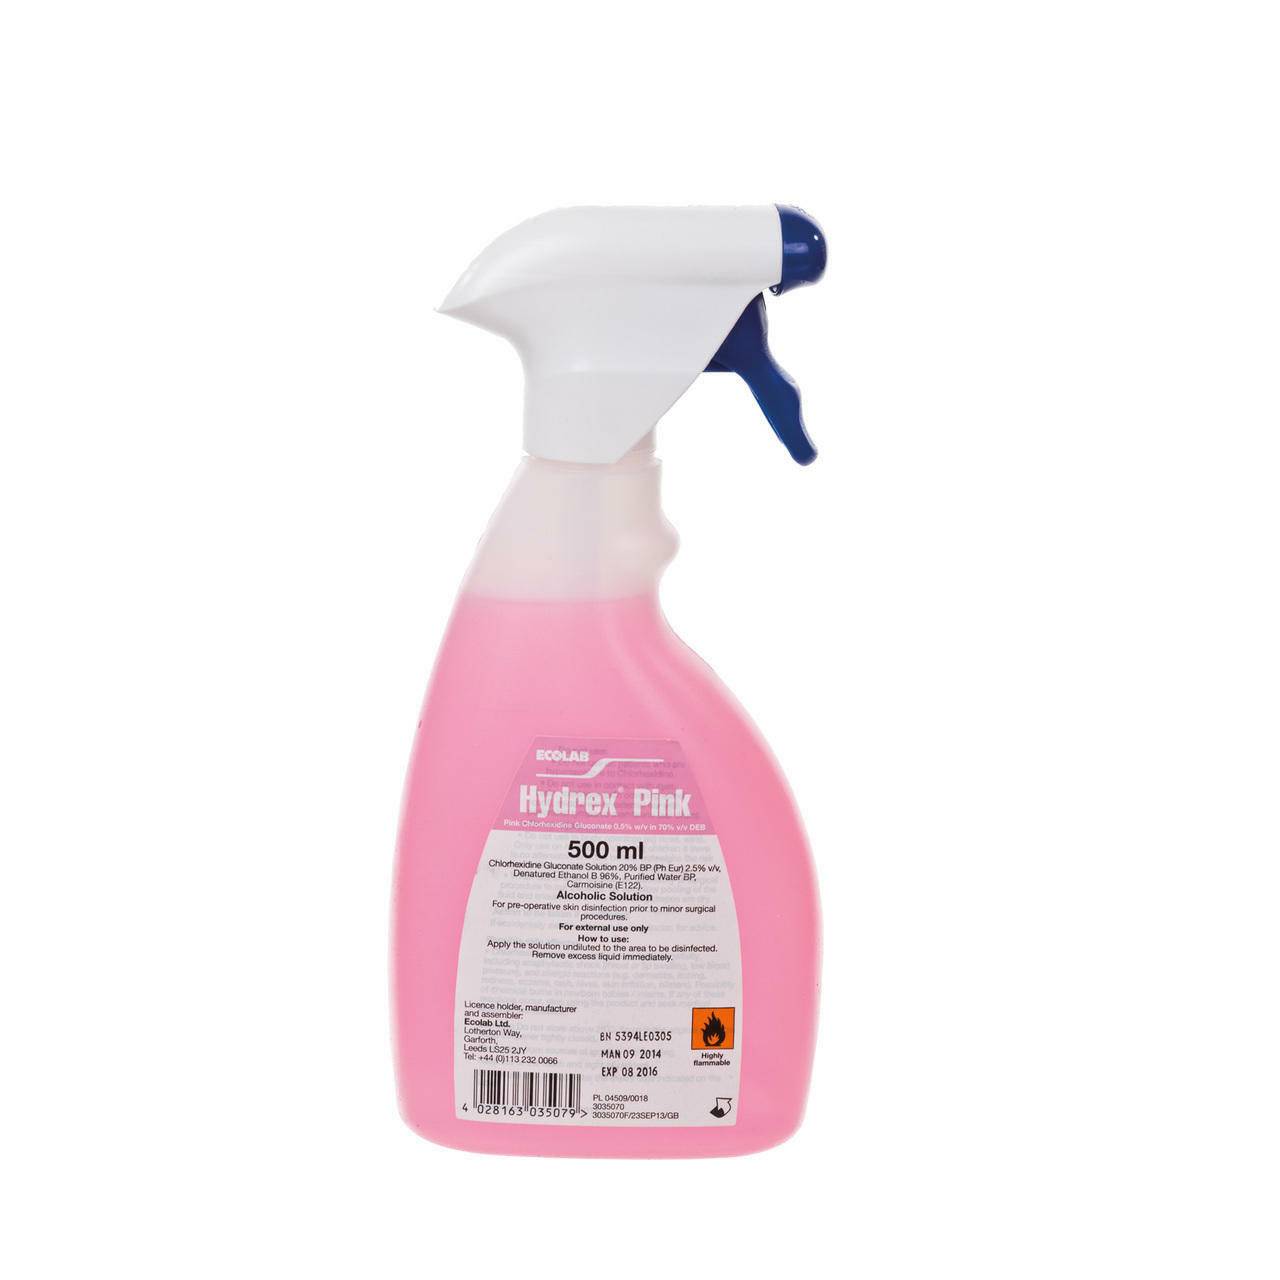 Hydrex Pink Trigger Spray 500ml 3035070 UKMEDI.CO.UK